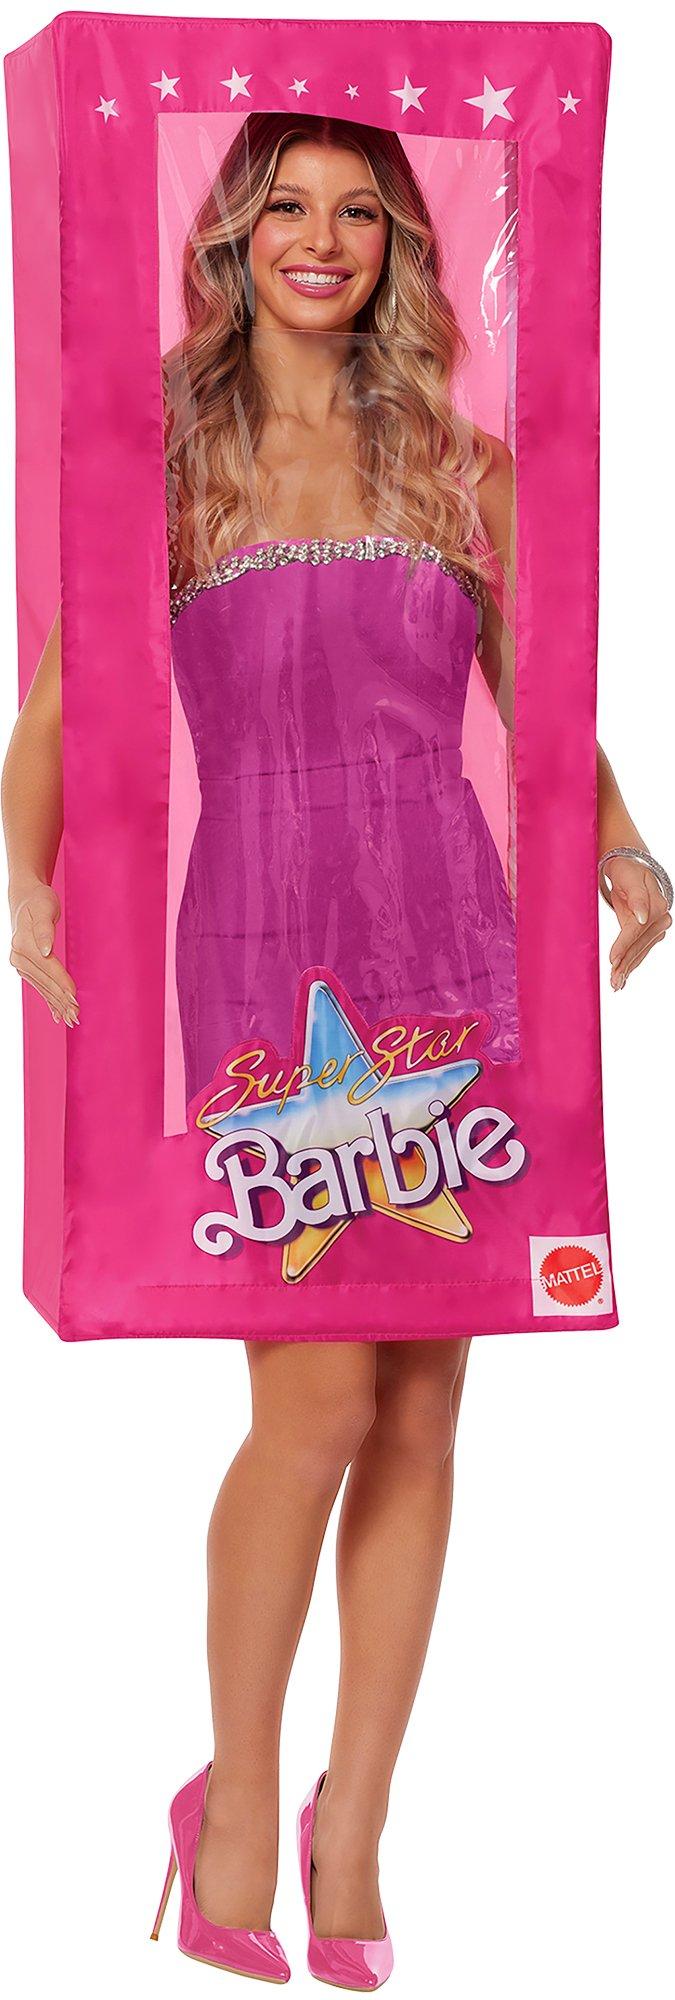 Barbie Leotard 